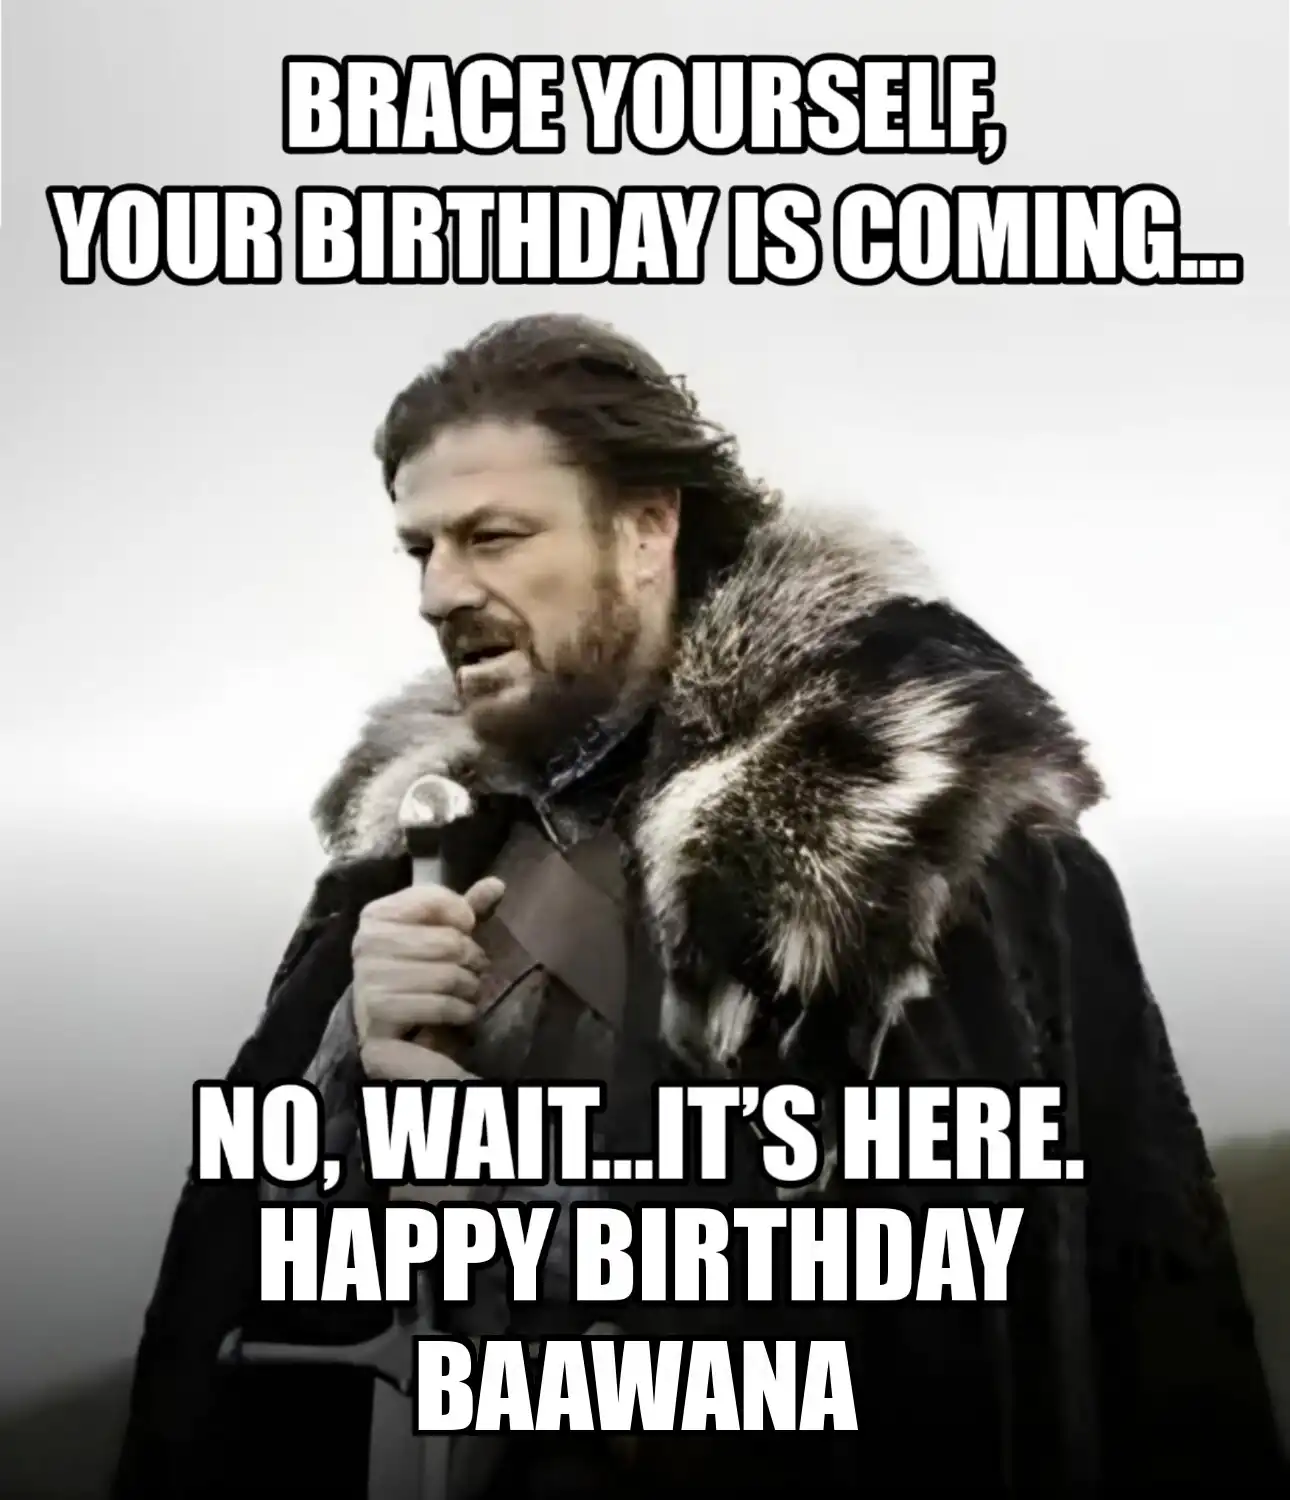 Happy Birthday Baawana Brace Yourself Your Birthday Is Coming Meme